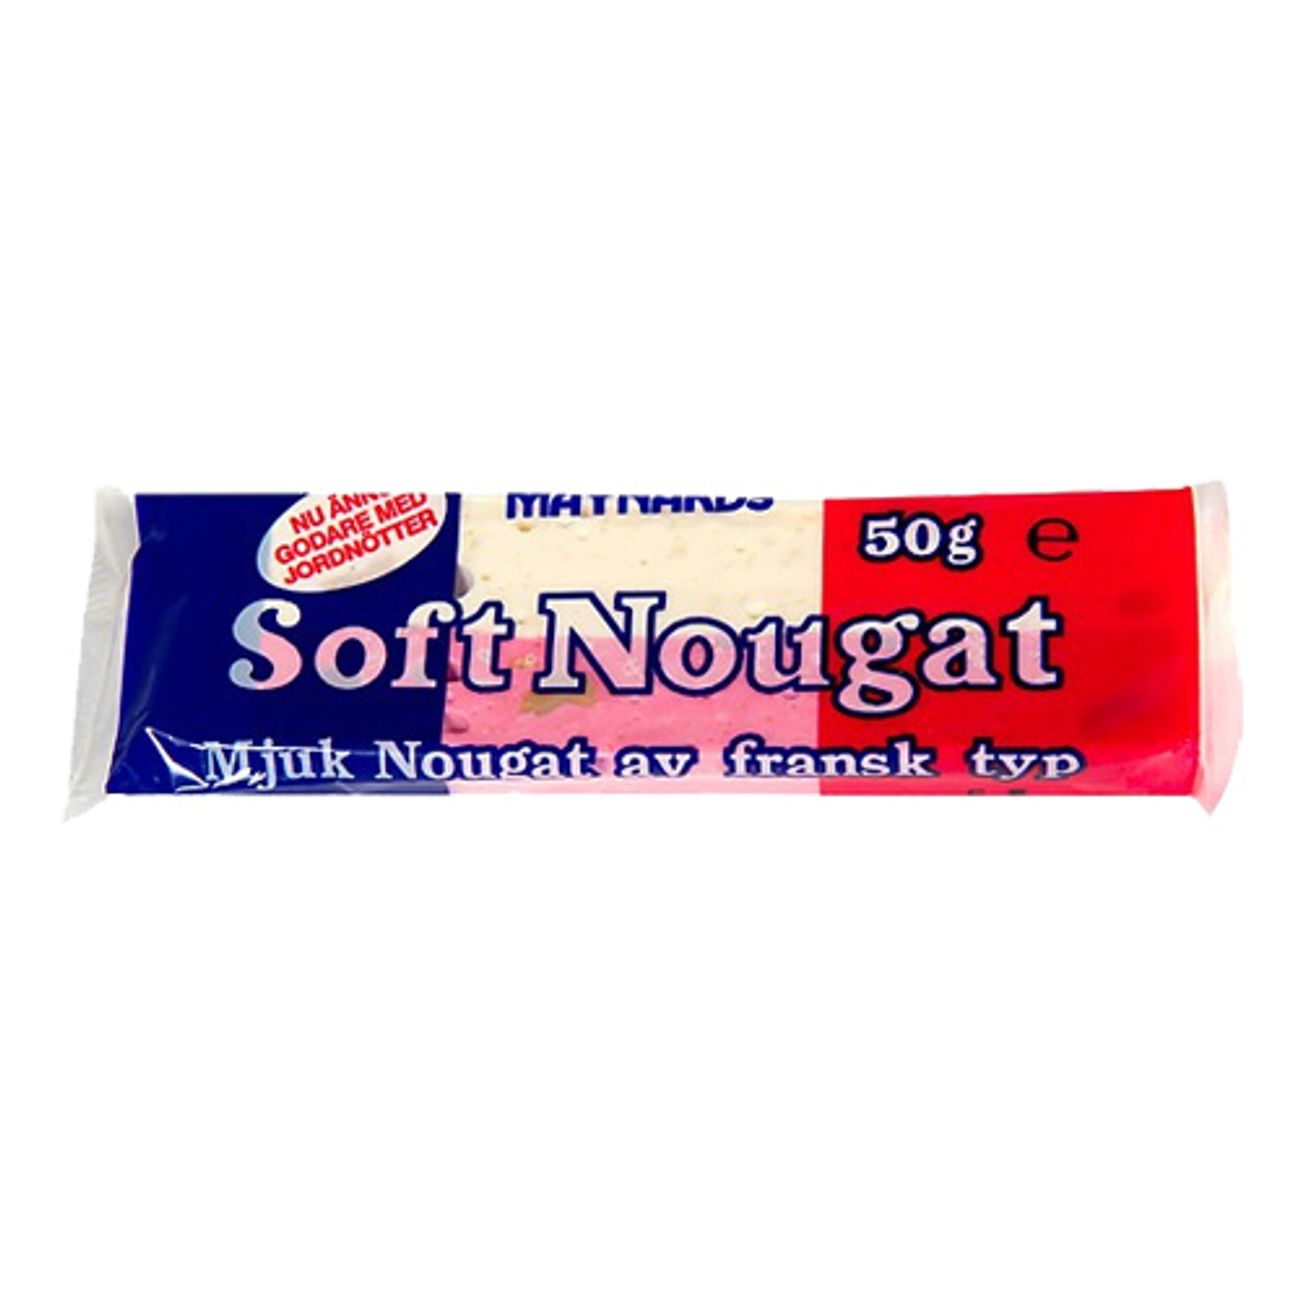 soft-nougat-1